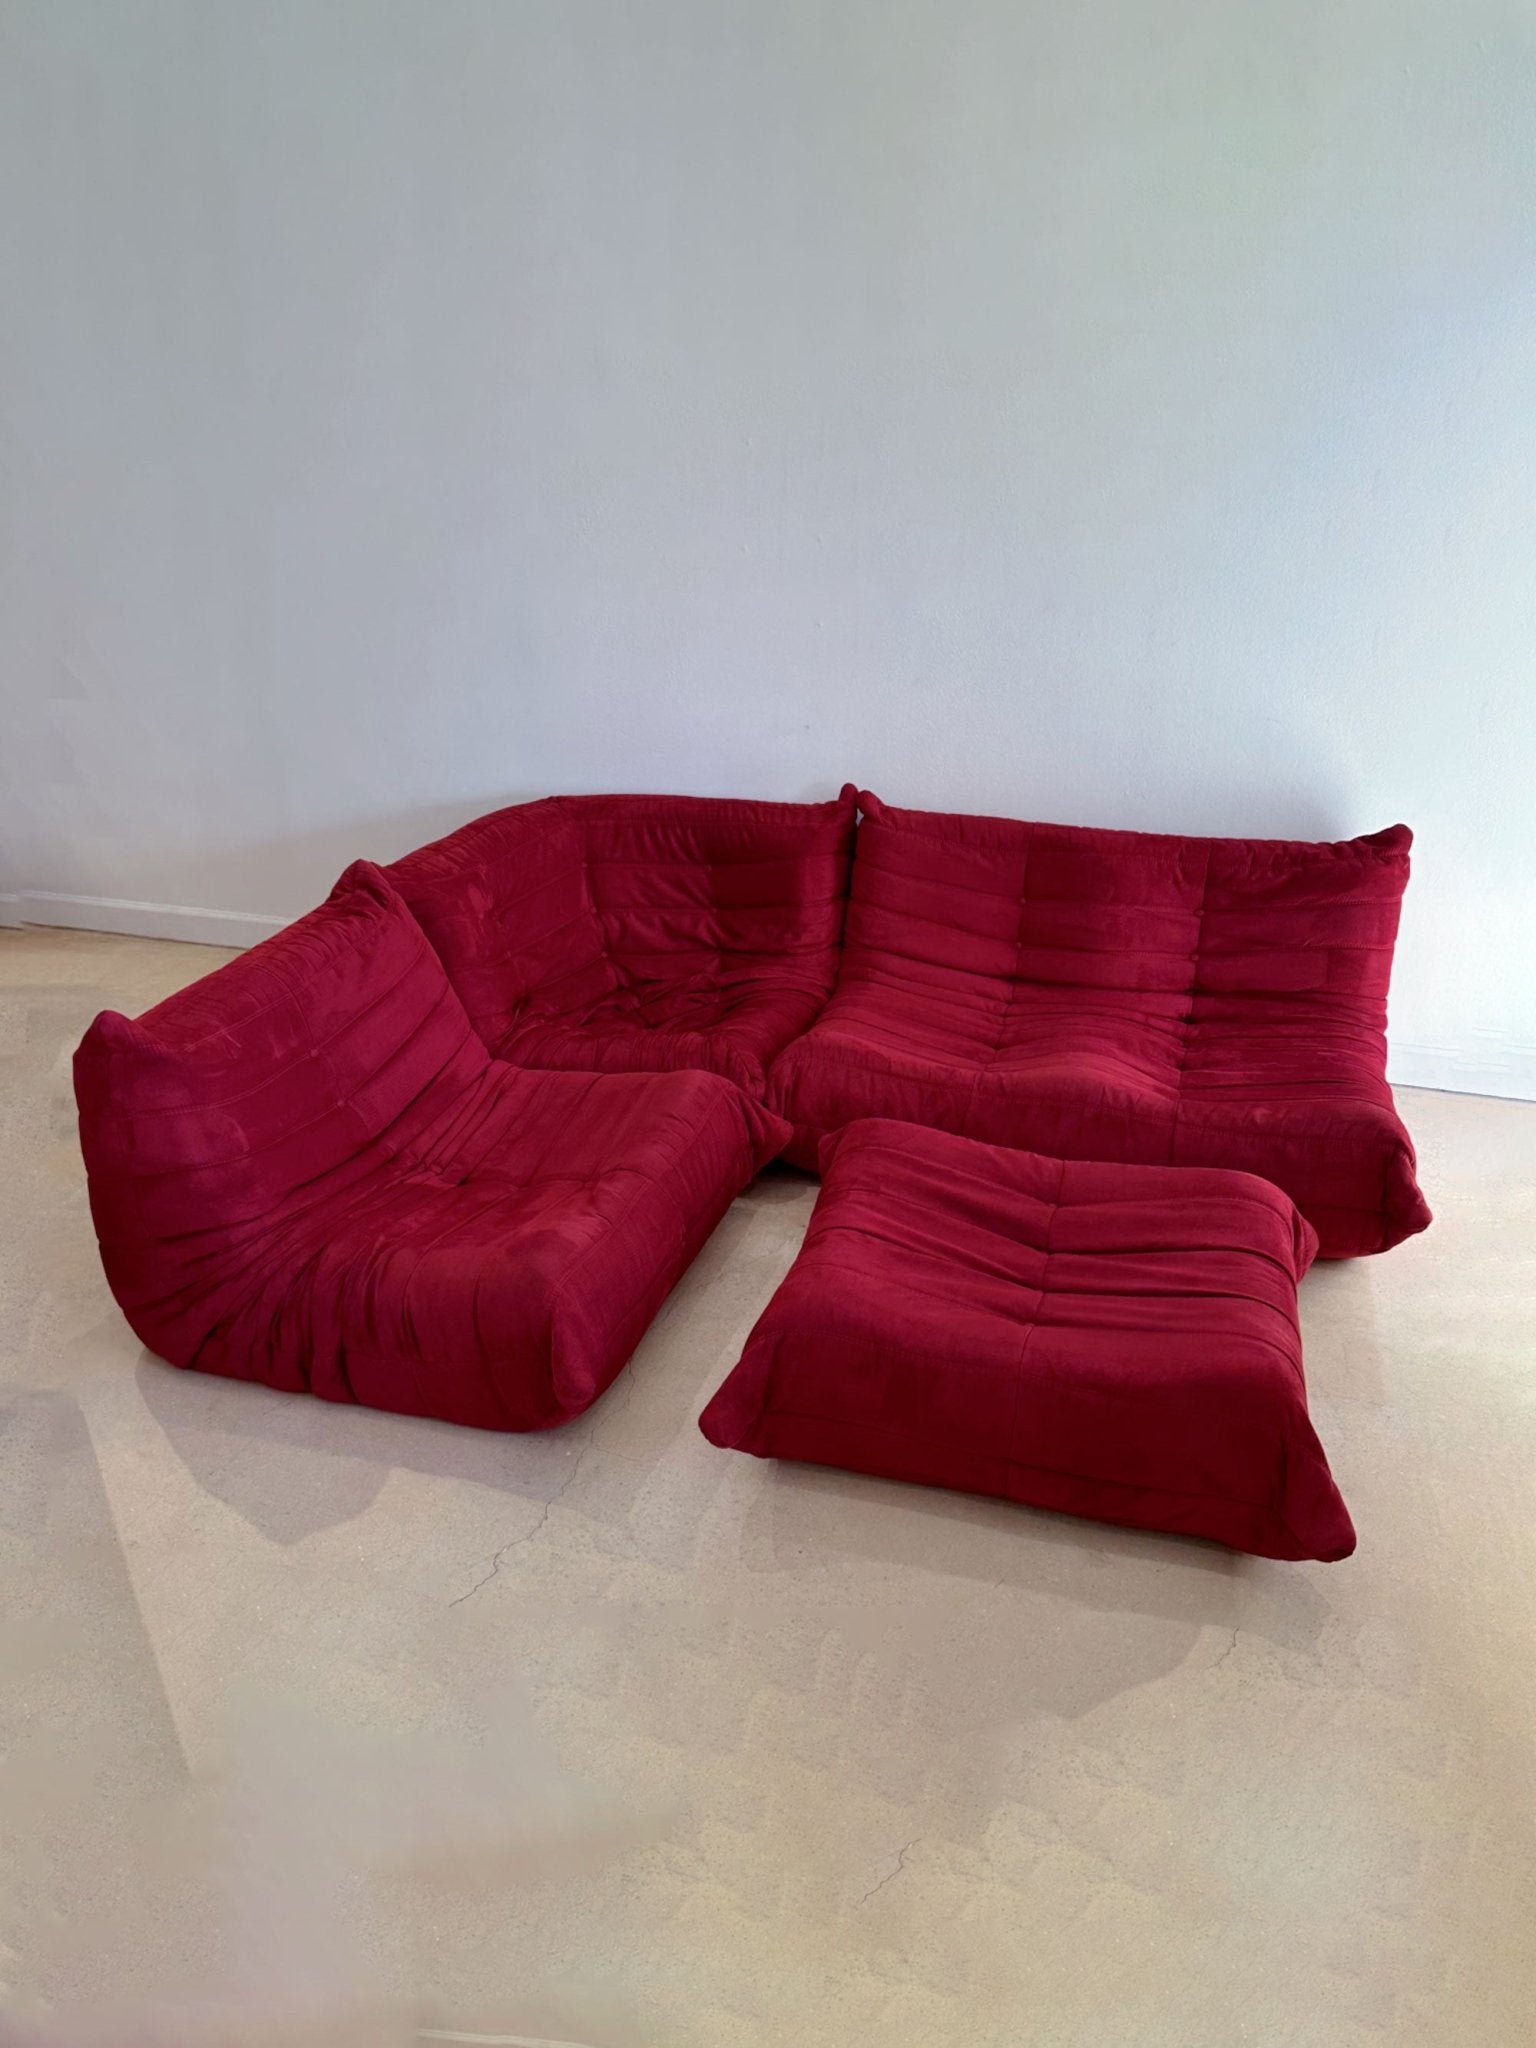 Deep Red Suede Togo-style Sofa Set - Rehaus